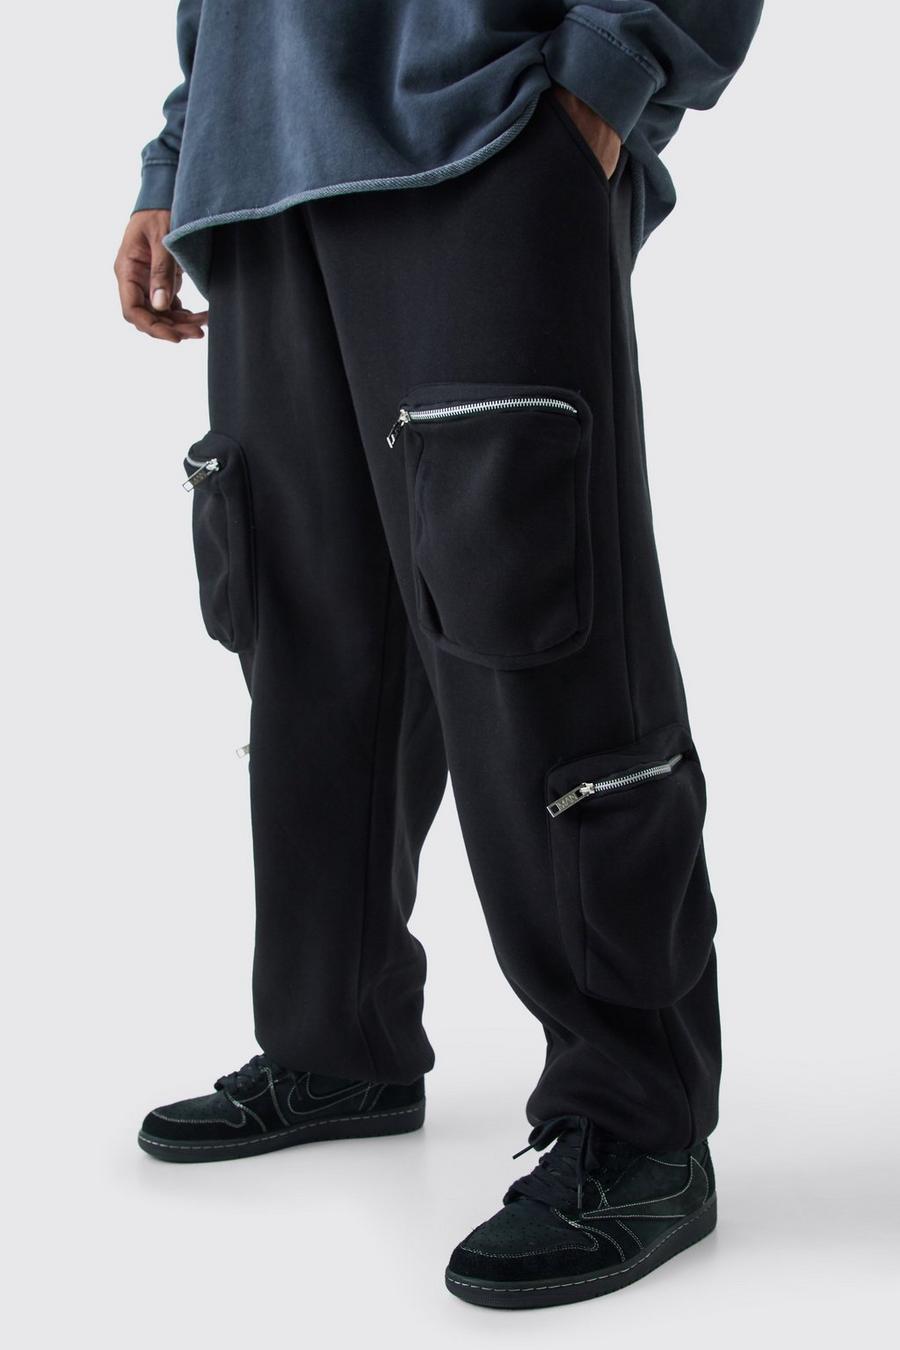 Pantalón deportivo Plus utilitario cargo, Black image number 1